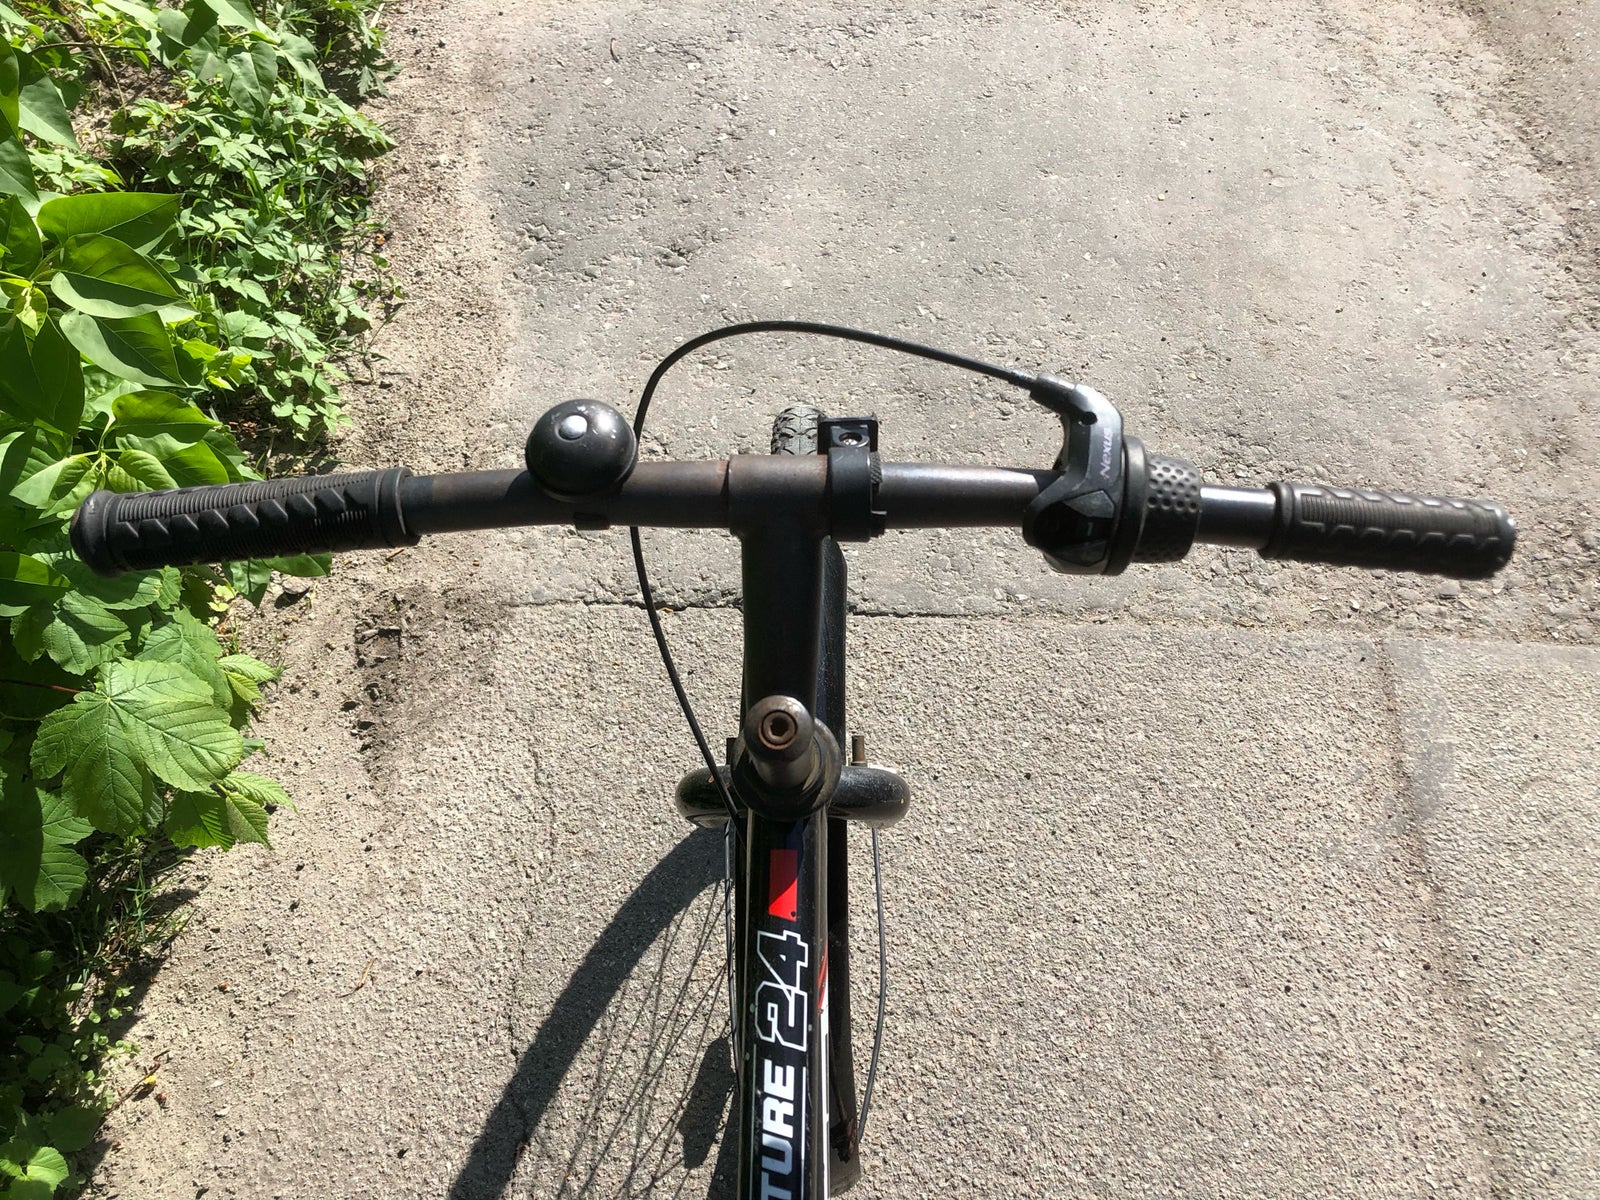 Drengecykel, citybike, 24 tommer hjul